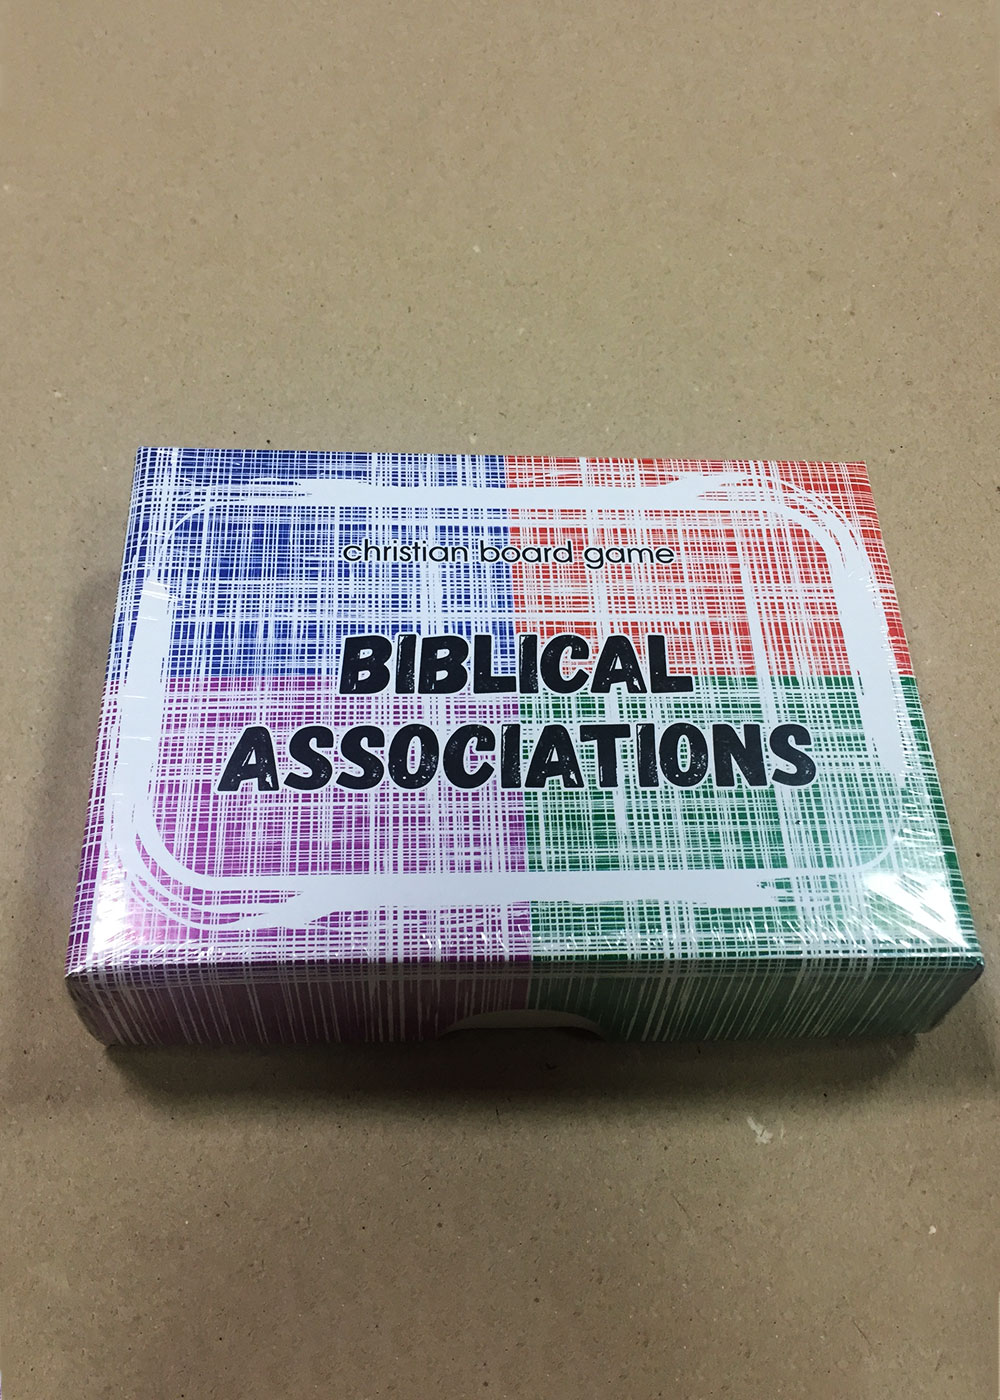 ИГРА  "BIBLICAL ASSOCIATIONS "